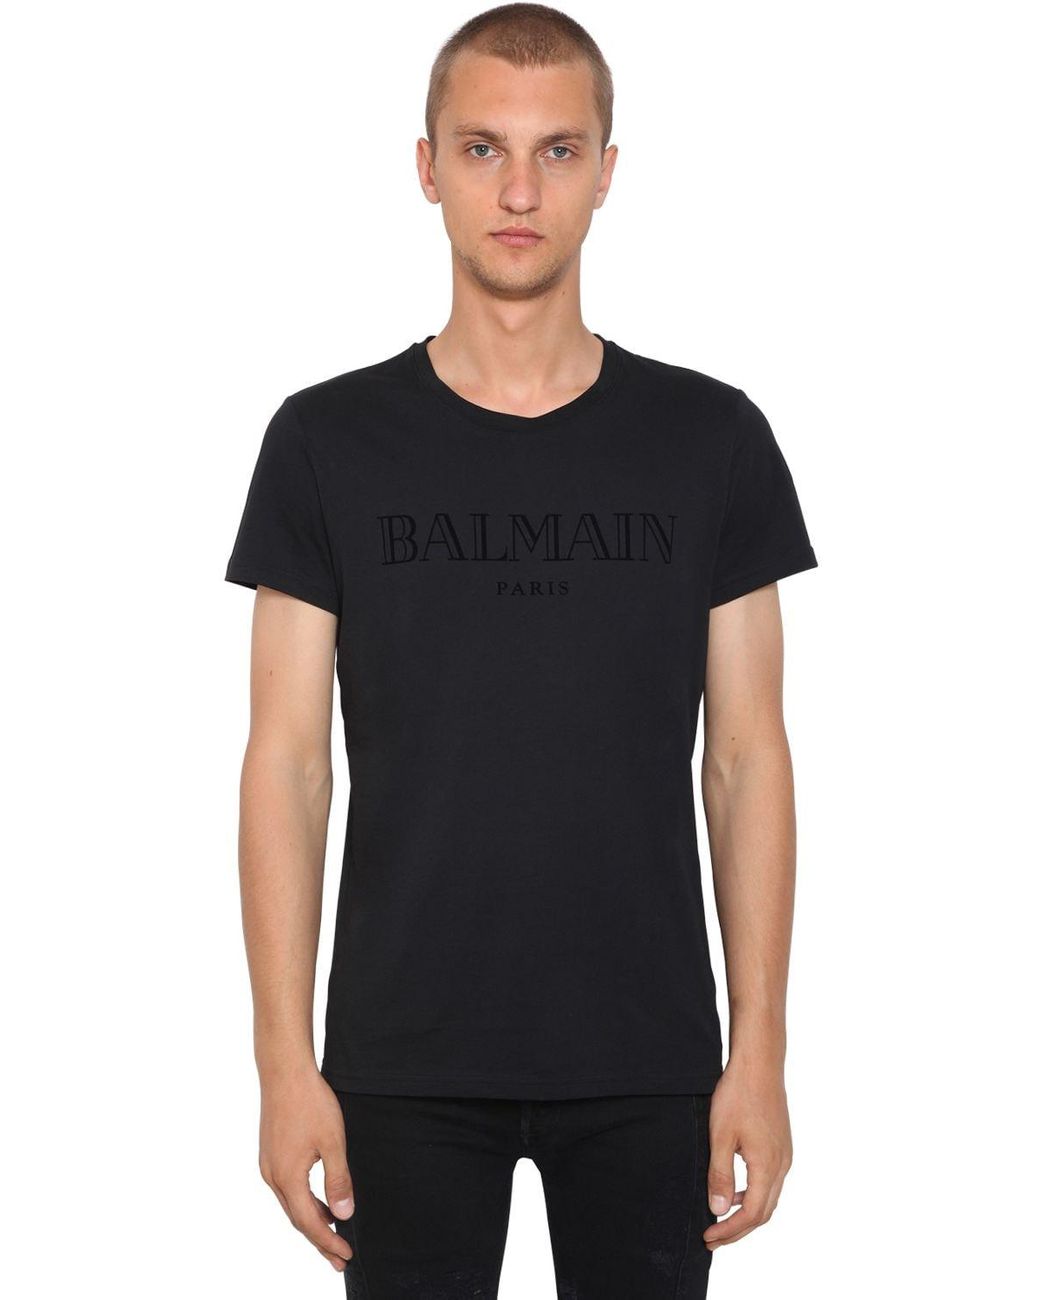 Balmain Flocked Logo Cotton Jersey T-shirt in Black for Men - Lyst